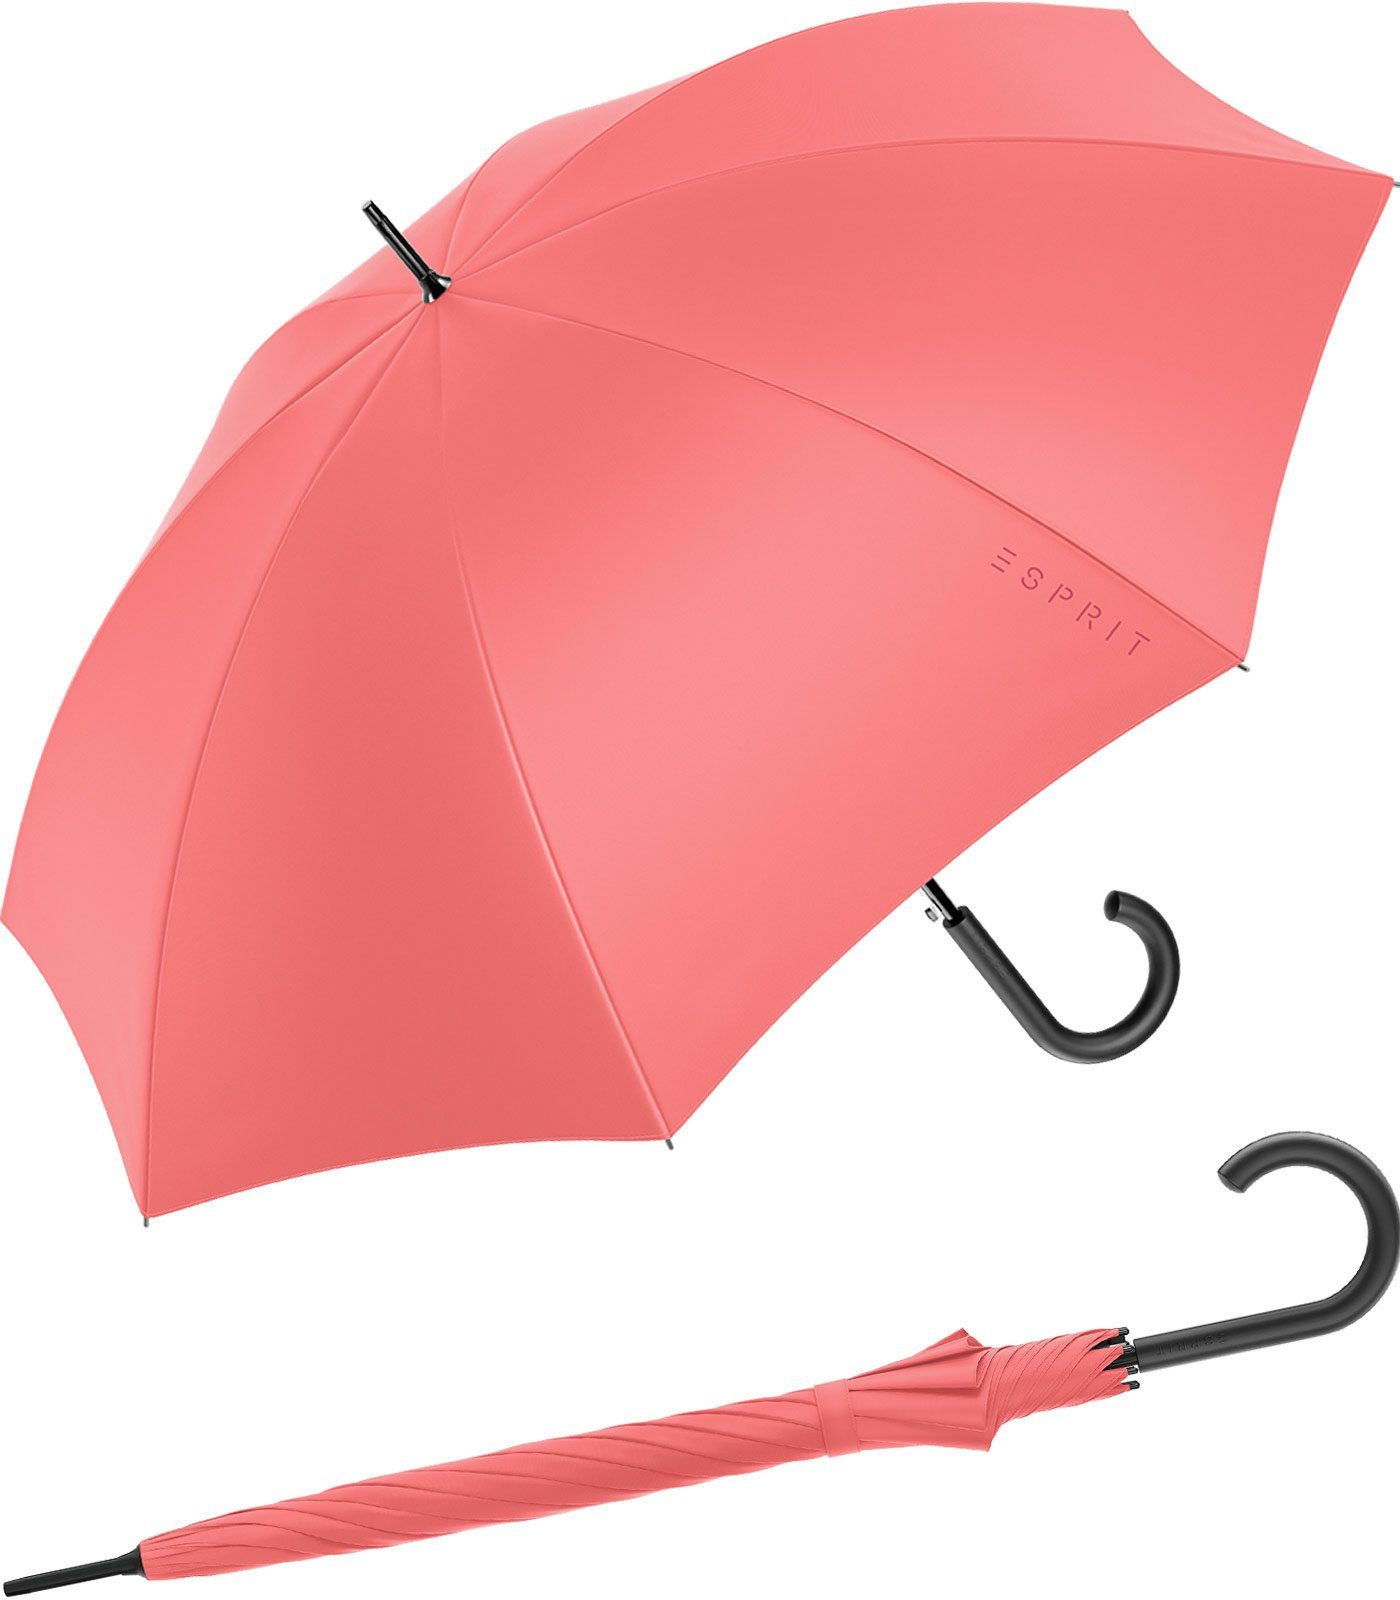 Esprit Langregenschirm Damen-Regenschirm mit Automatik FJ 2023, groß und stabil, in den Trendfarben koralle | Stockschirme